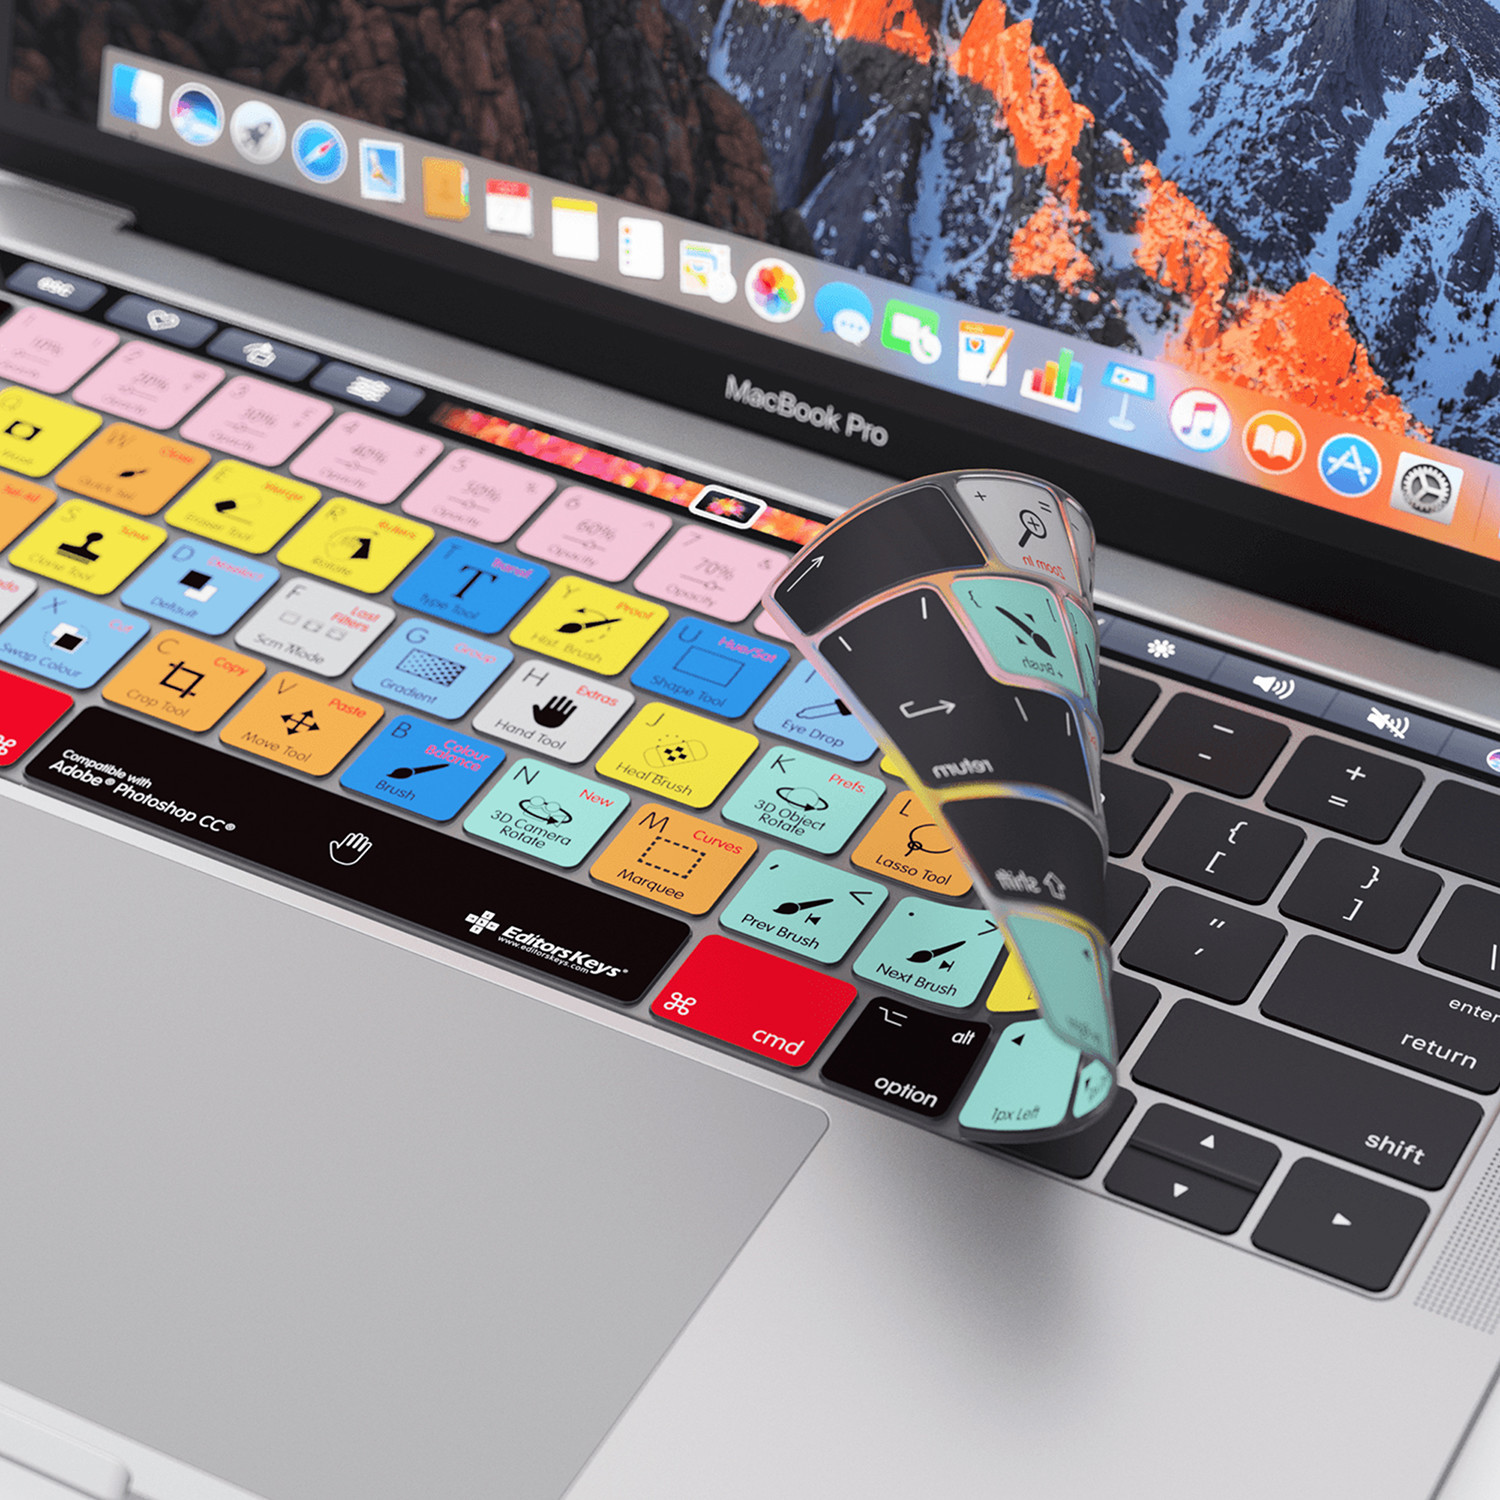 Adobe Photoshop // MacBook Pro + Touchbar - Editors Keys - Touch of Modern